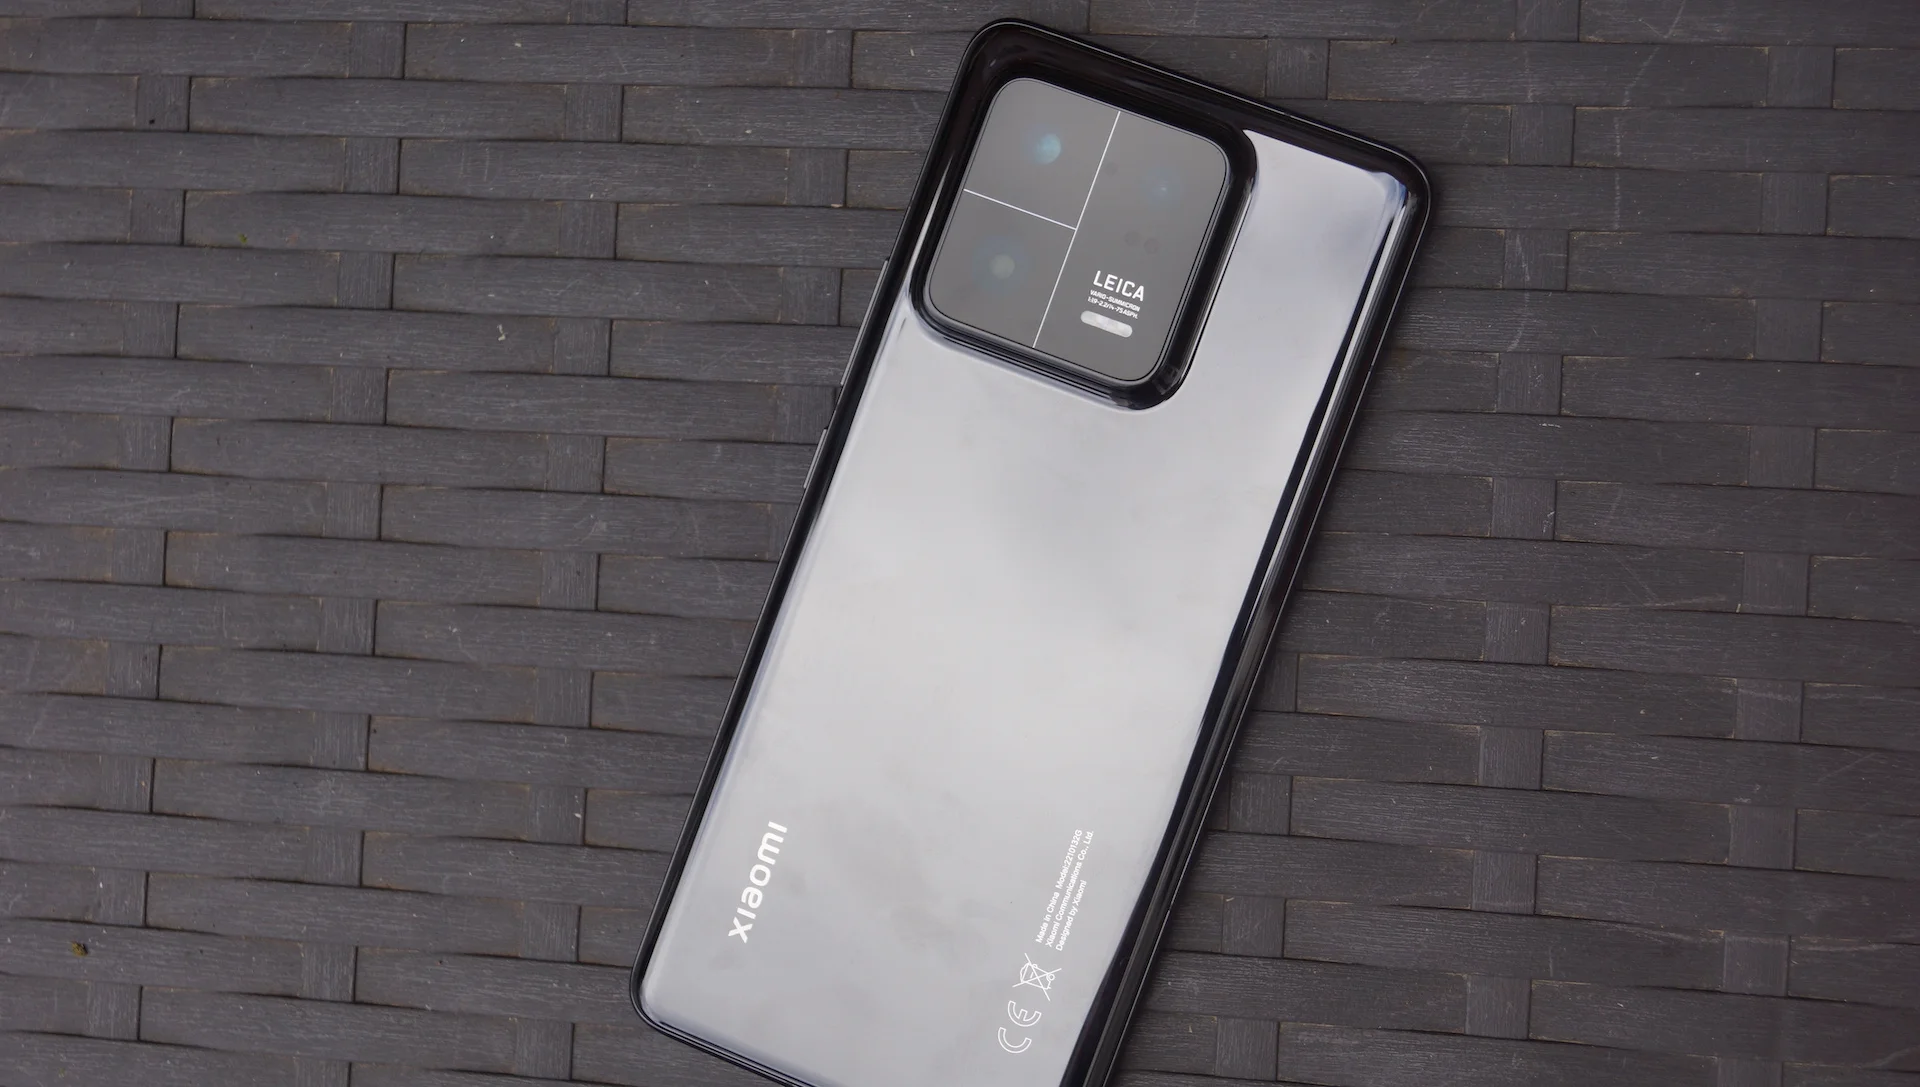 Redmi Note 13 Pro Plus 5G (12GB/512GB | Black)